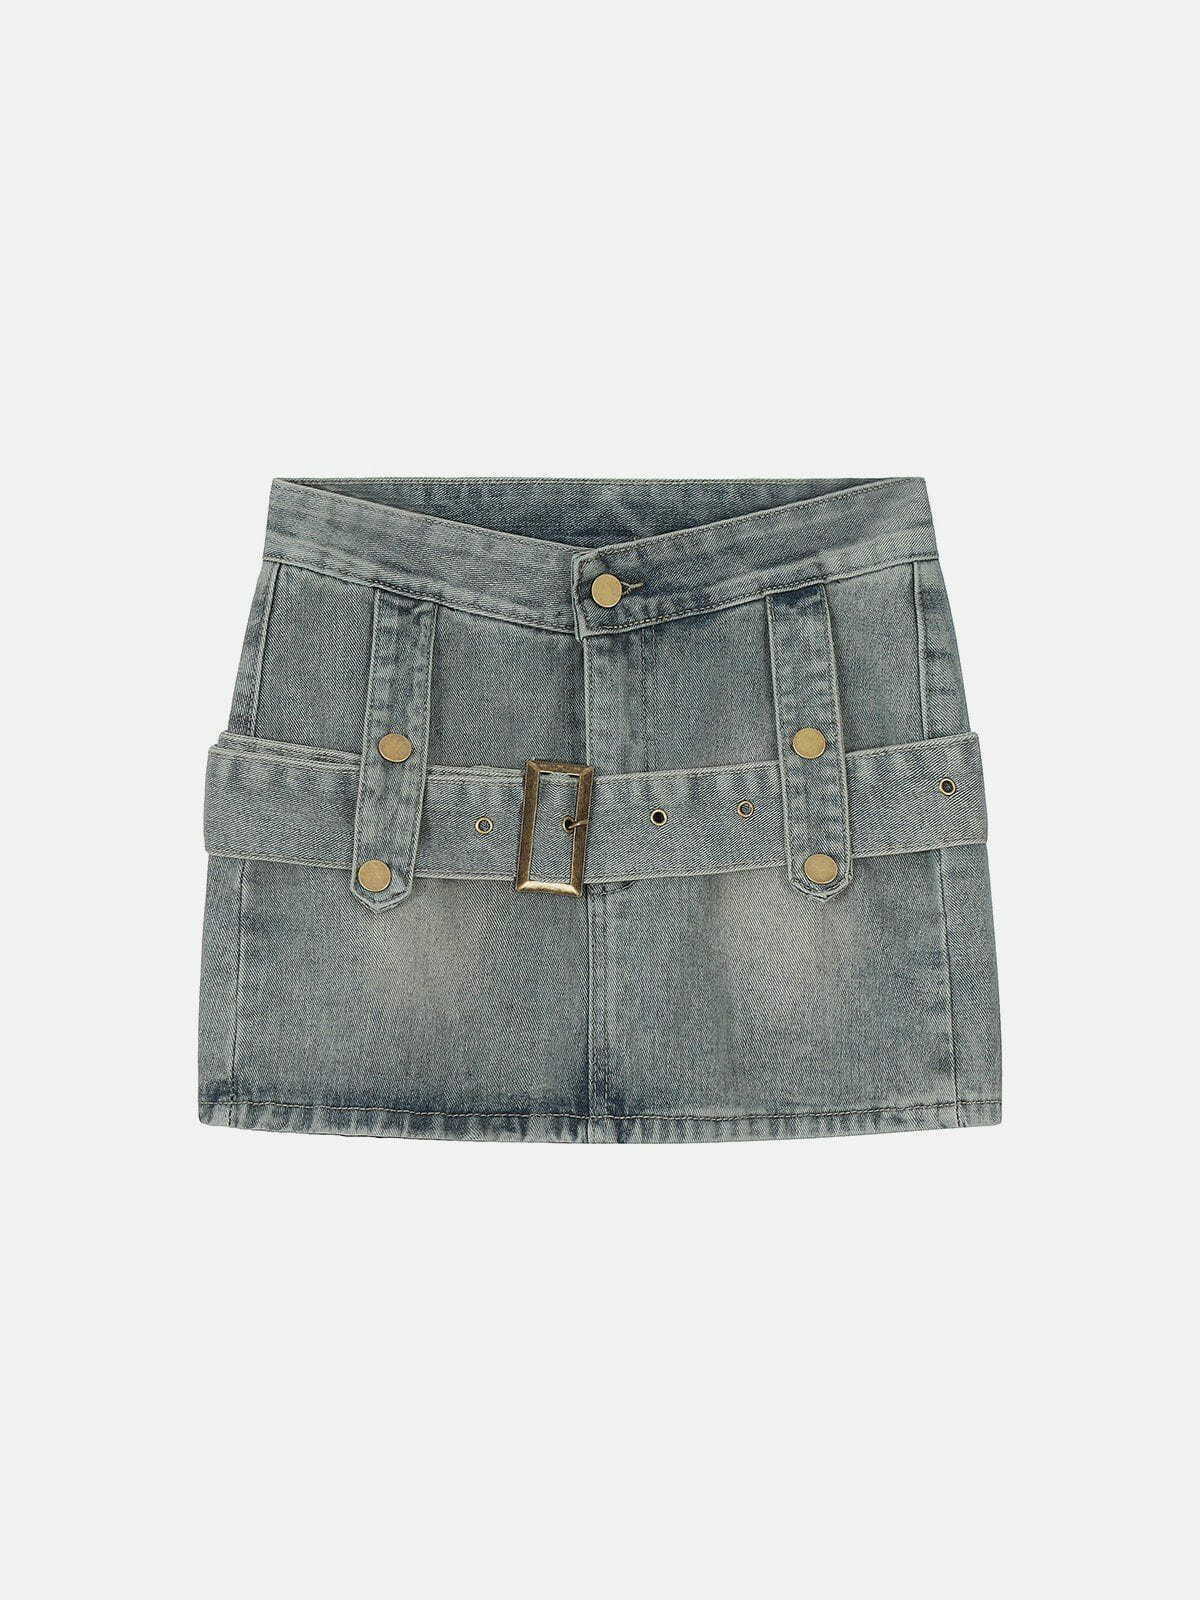 vibrant denim skirt with vintage belt 2384